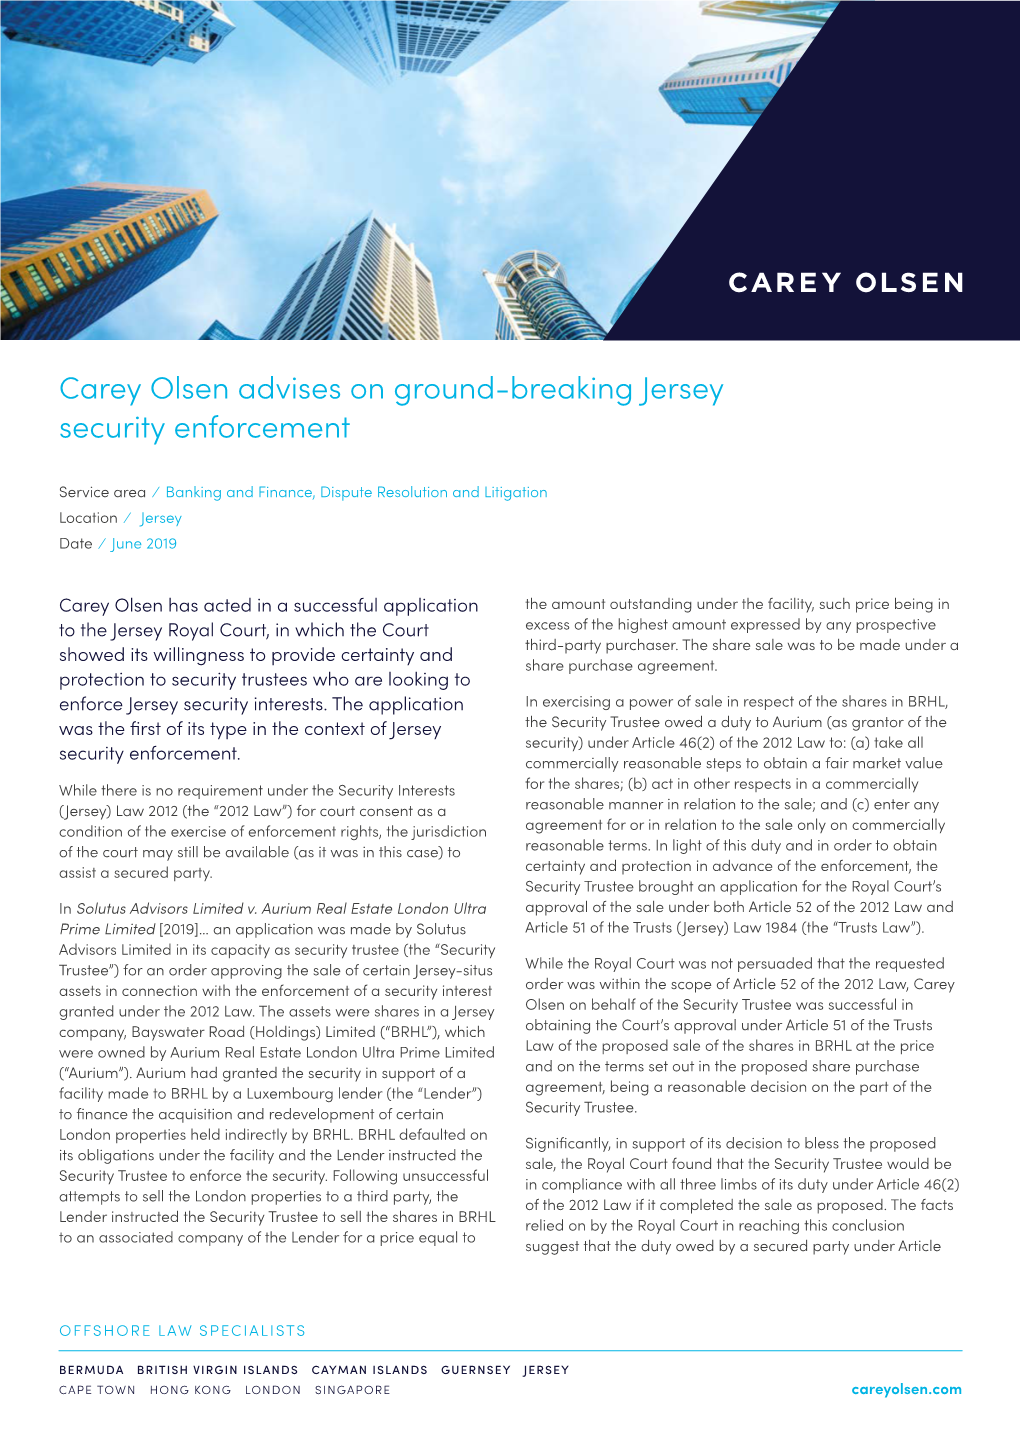 Carey Olsen Advises on Ground-Breaking Jersey Security Enforcement